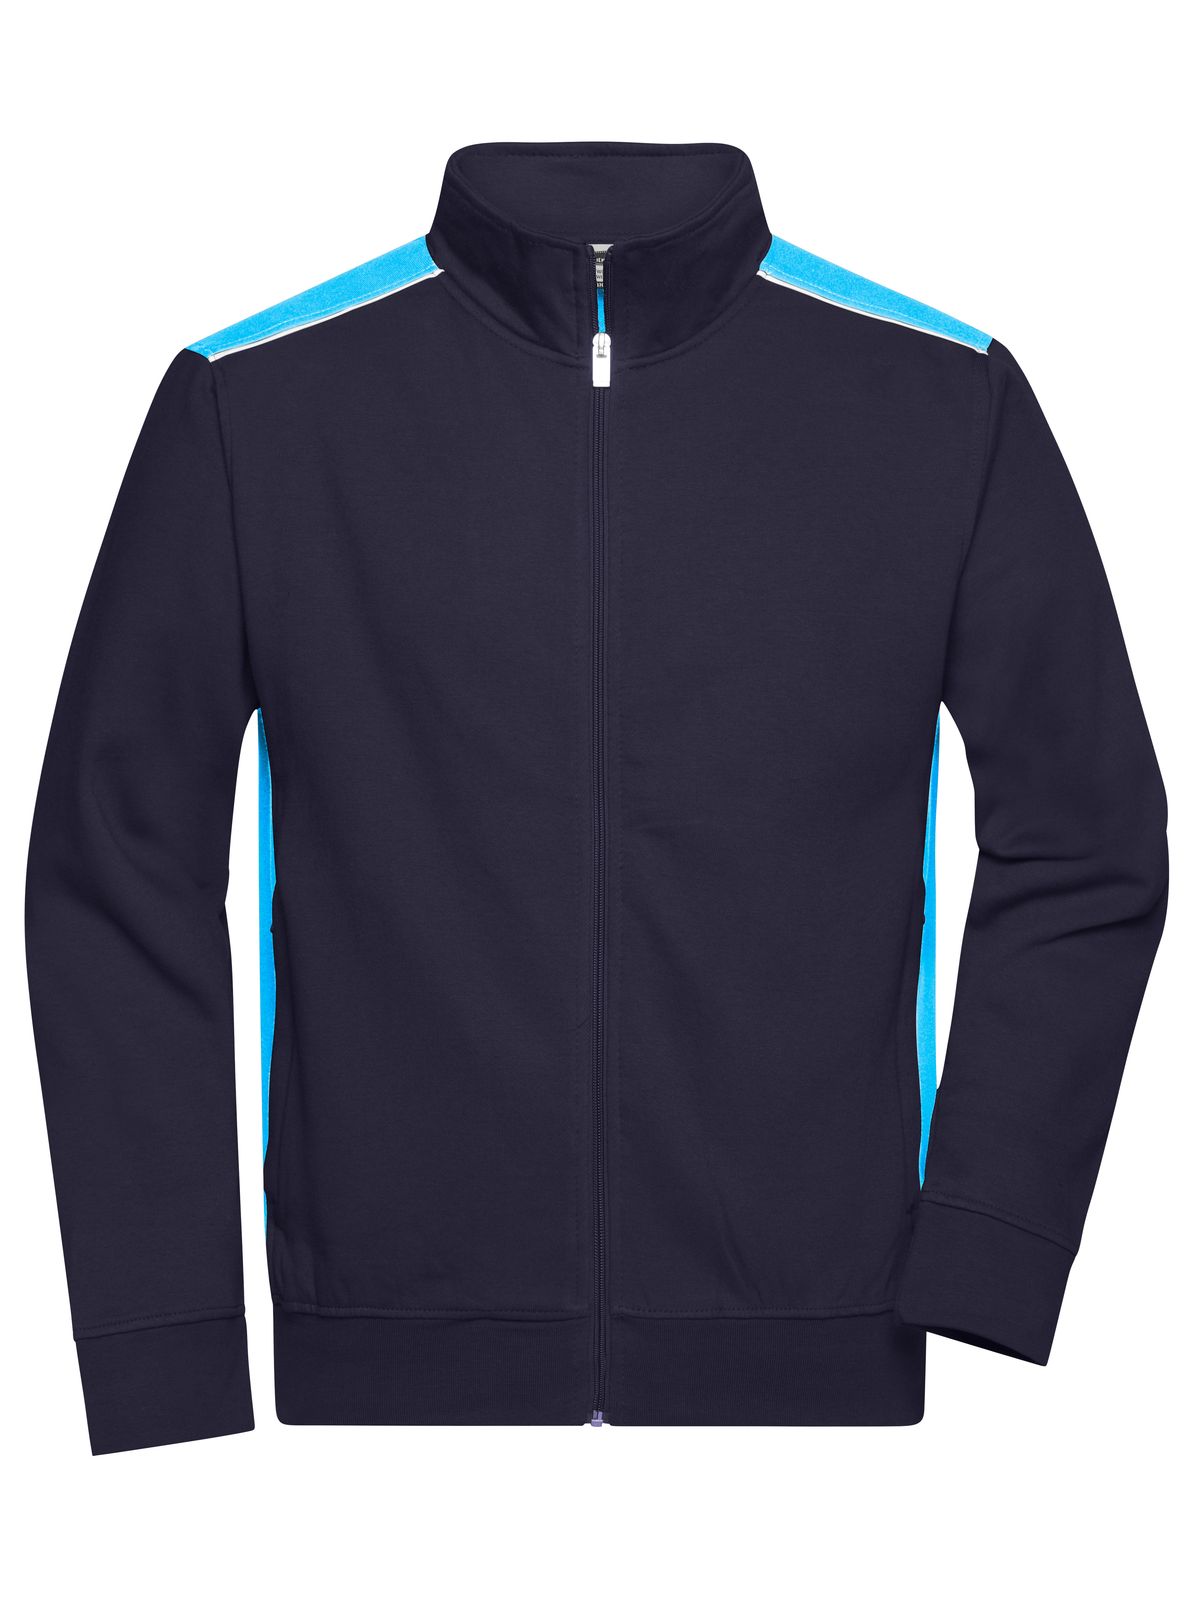 mens-workwear-sweat-jacket-color-navy-tourquoise.webp